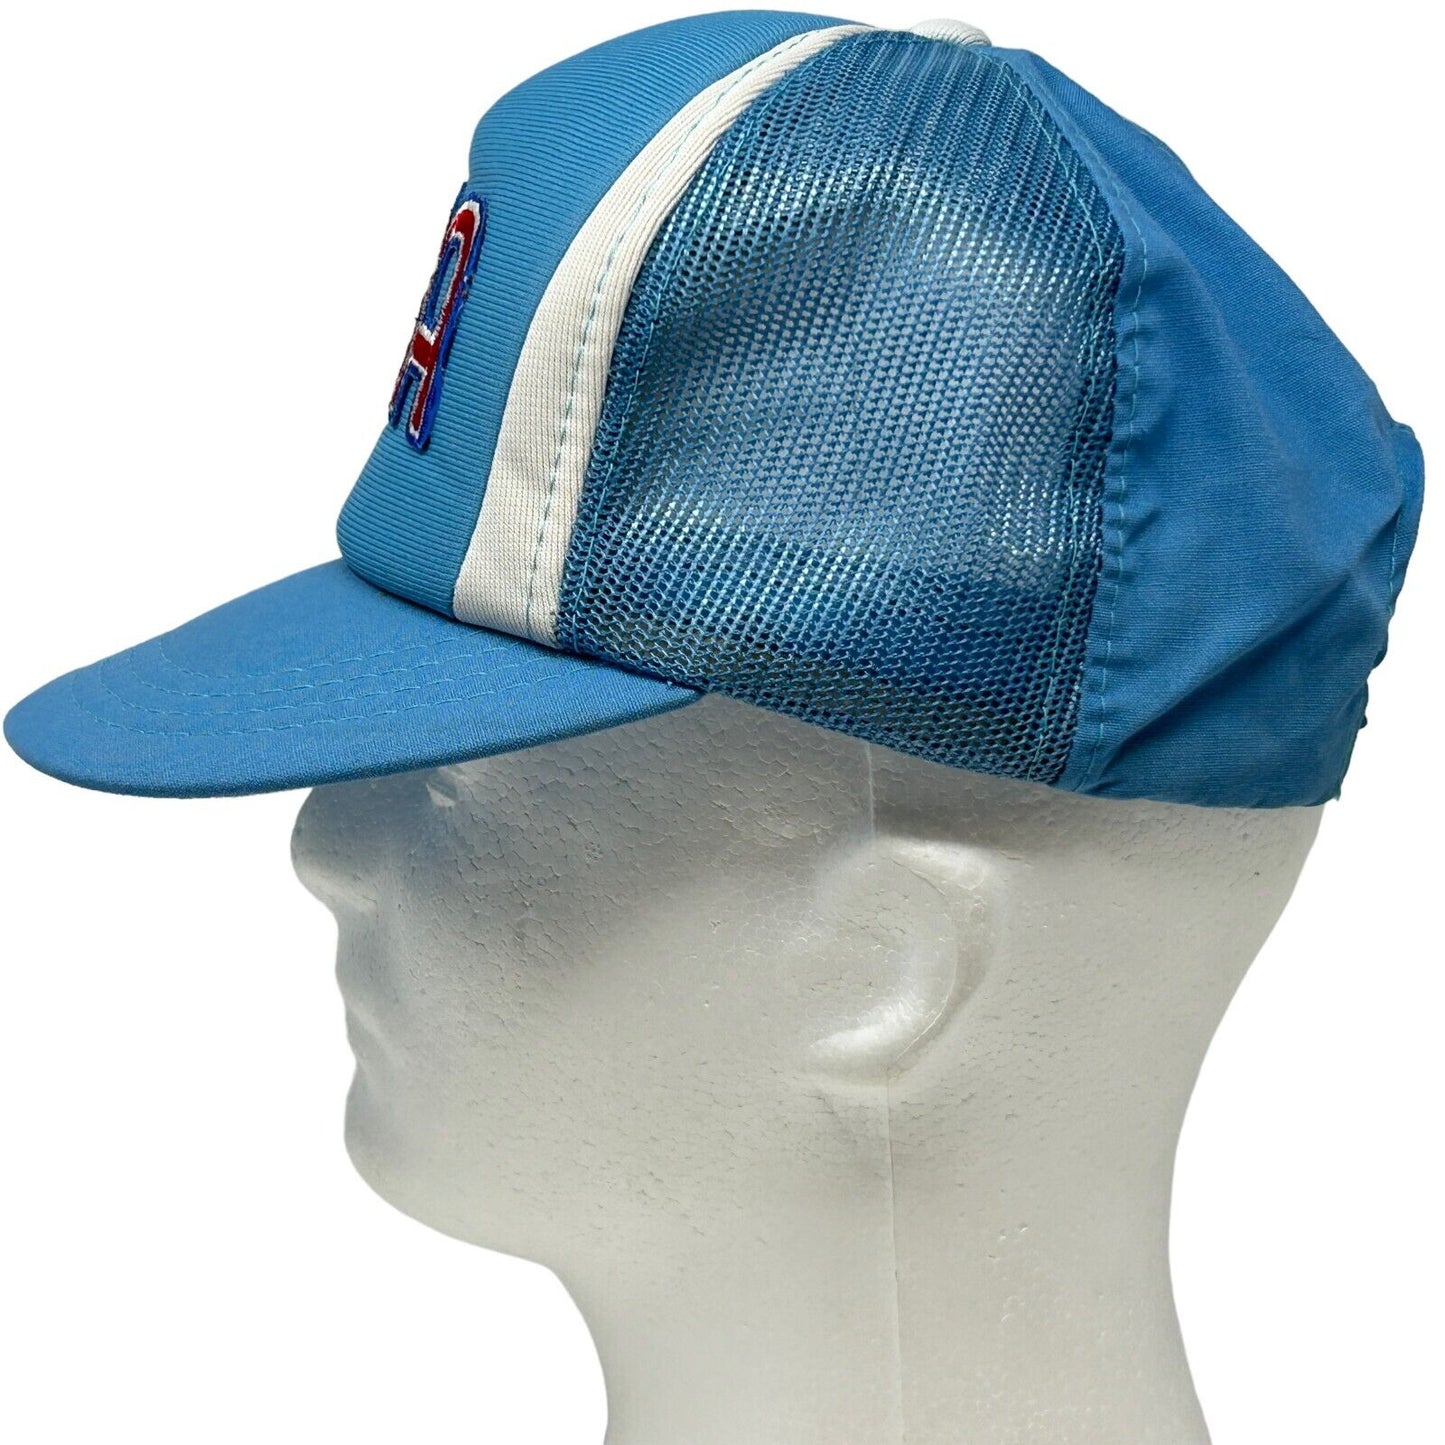 USA Patriotic Snapback Trucker Hat Vintage 70s 80s America Blue Baseball Cap